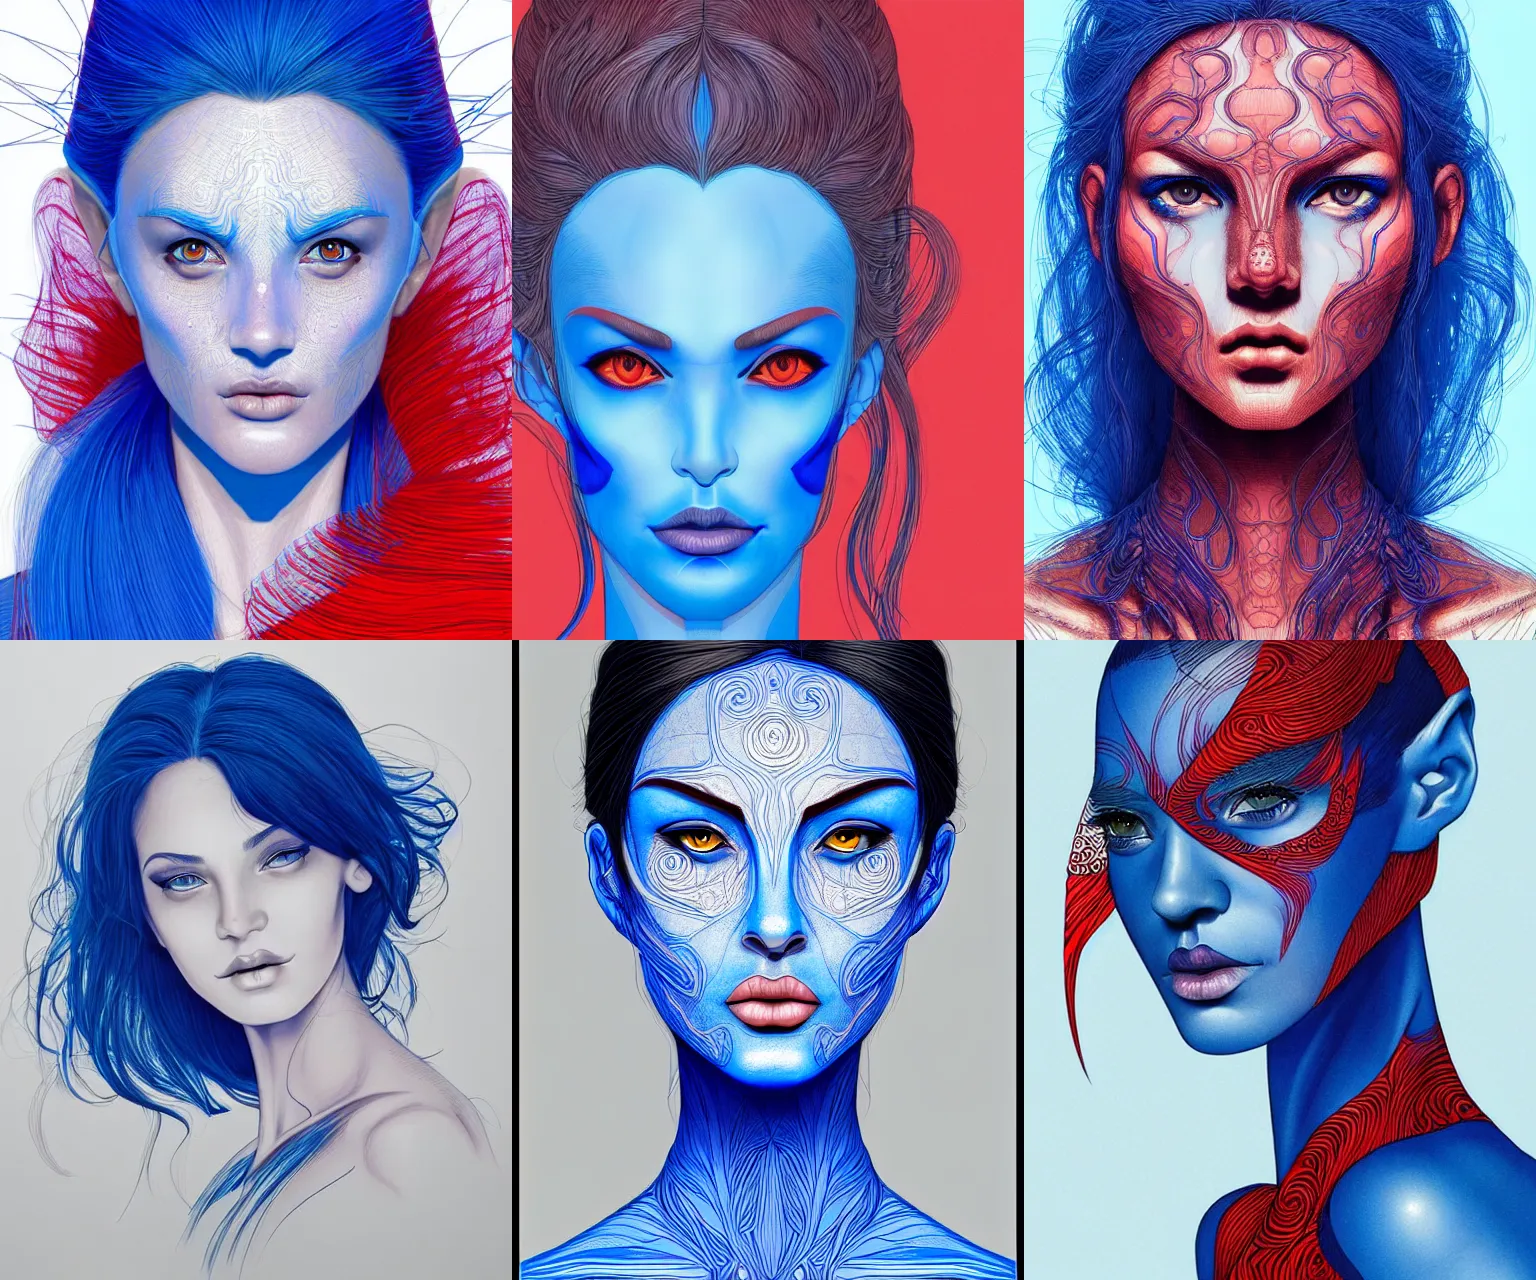 Prompt: portrait of a blue skin woman, red eyes, beautiful, elegant, striking, intricate linework, artstation trending, by moebius, zoran janjetov, alejandro jodorowsky, jose ladronn